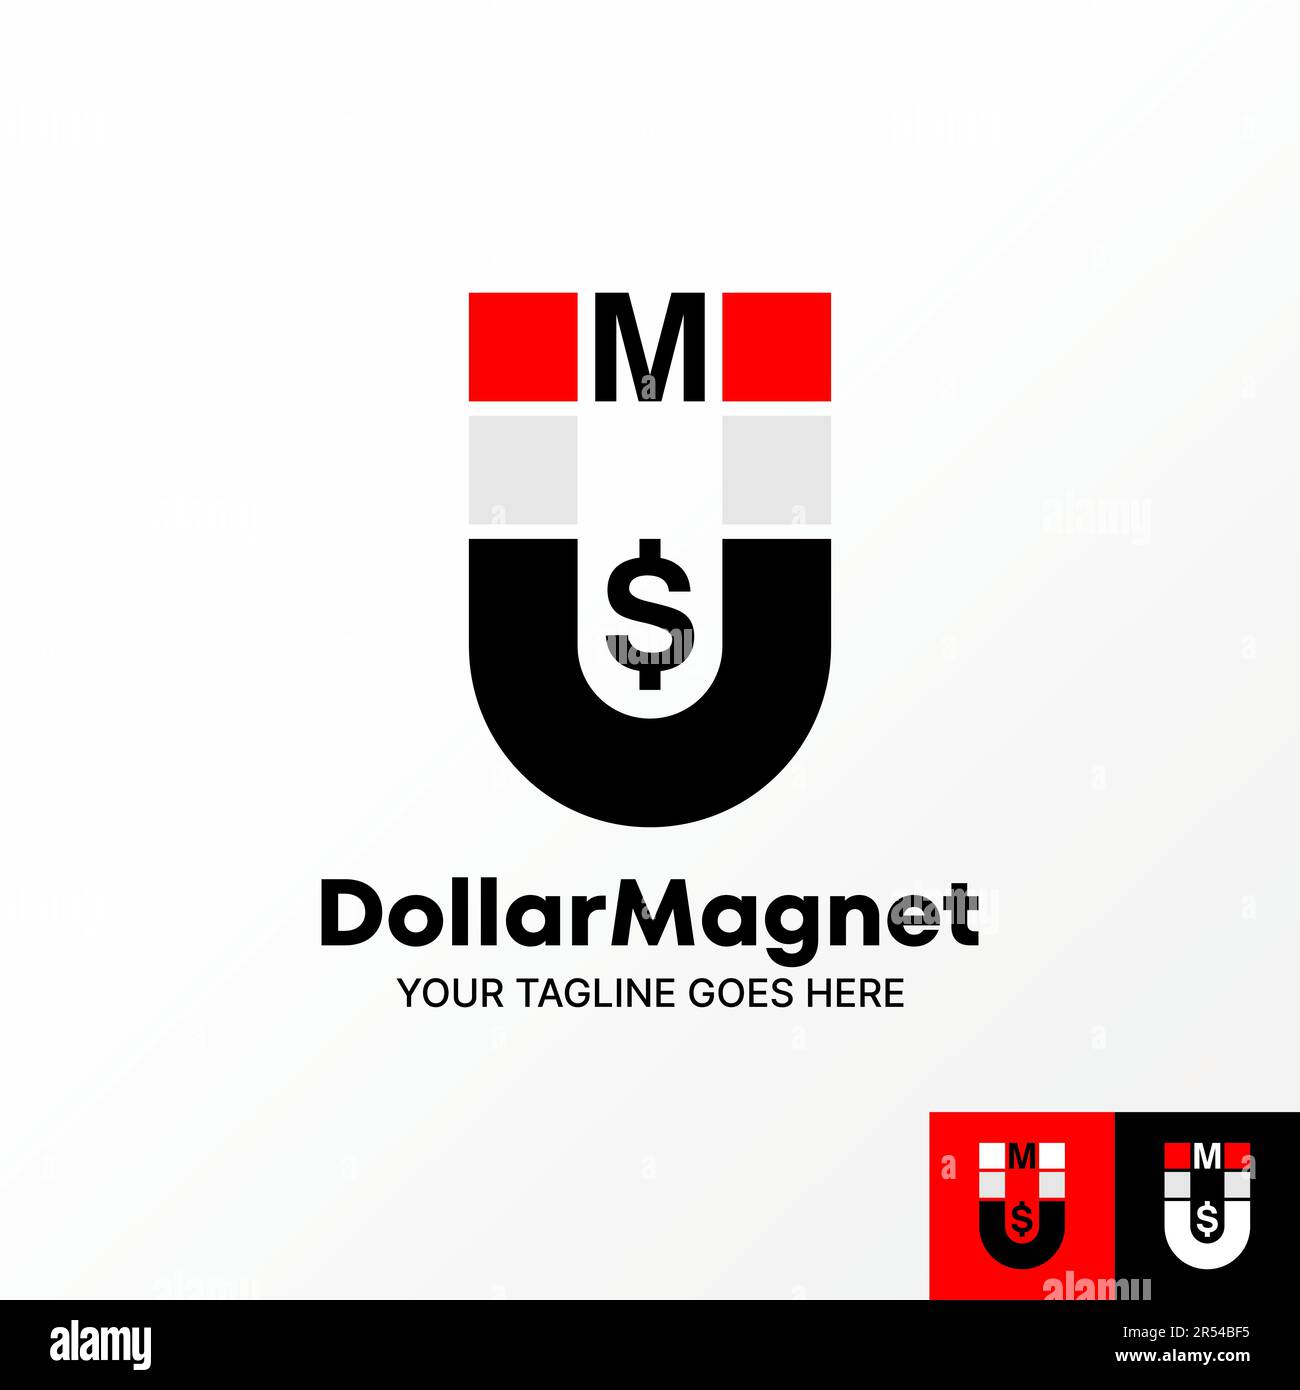 Magnet Logos - 15+ Best Magnet Logo Ideas. Free Magnet Logo Maker. |  99designs